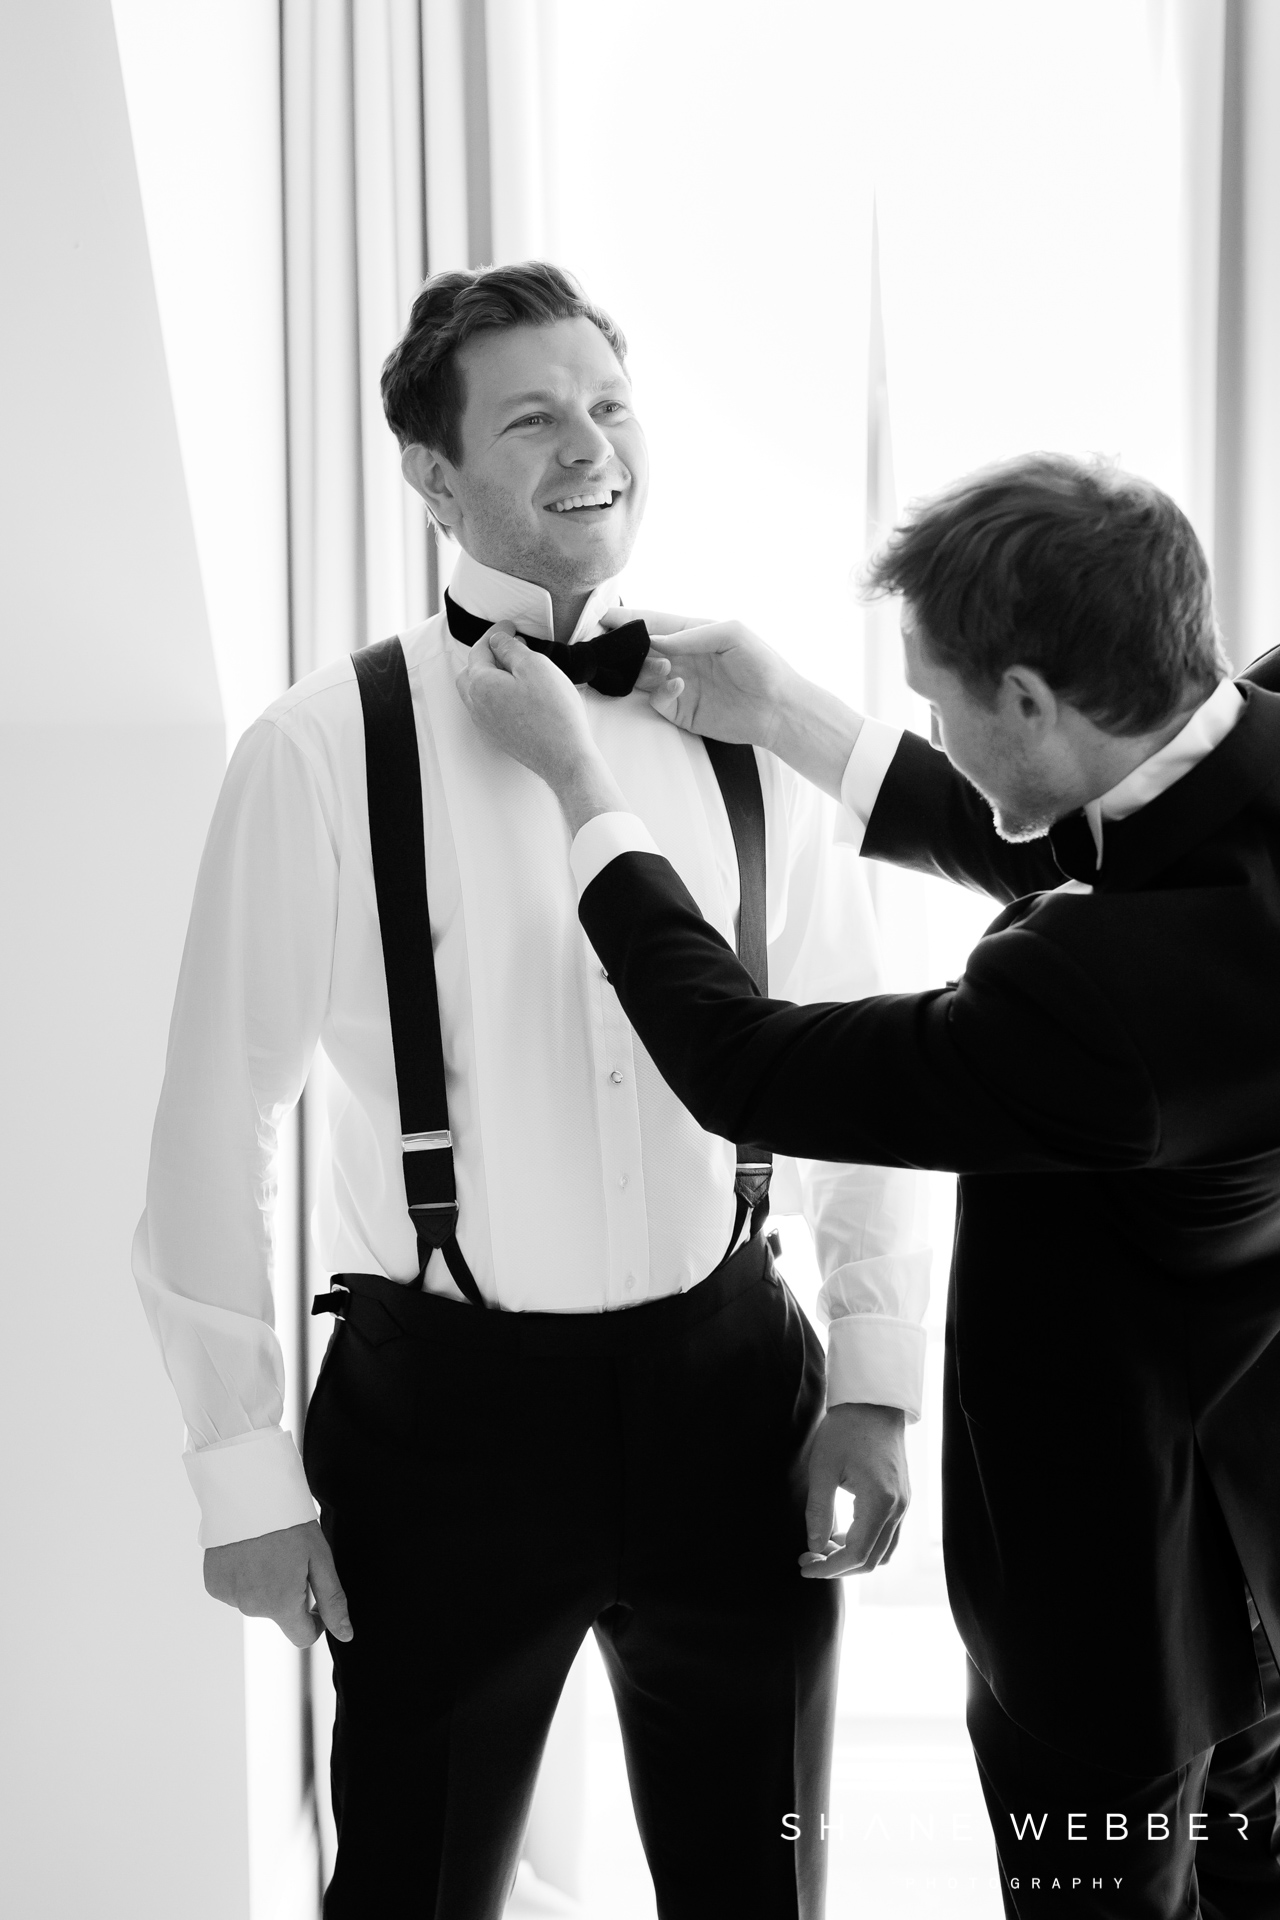 Grantley Hall groom preparation